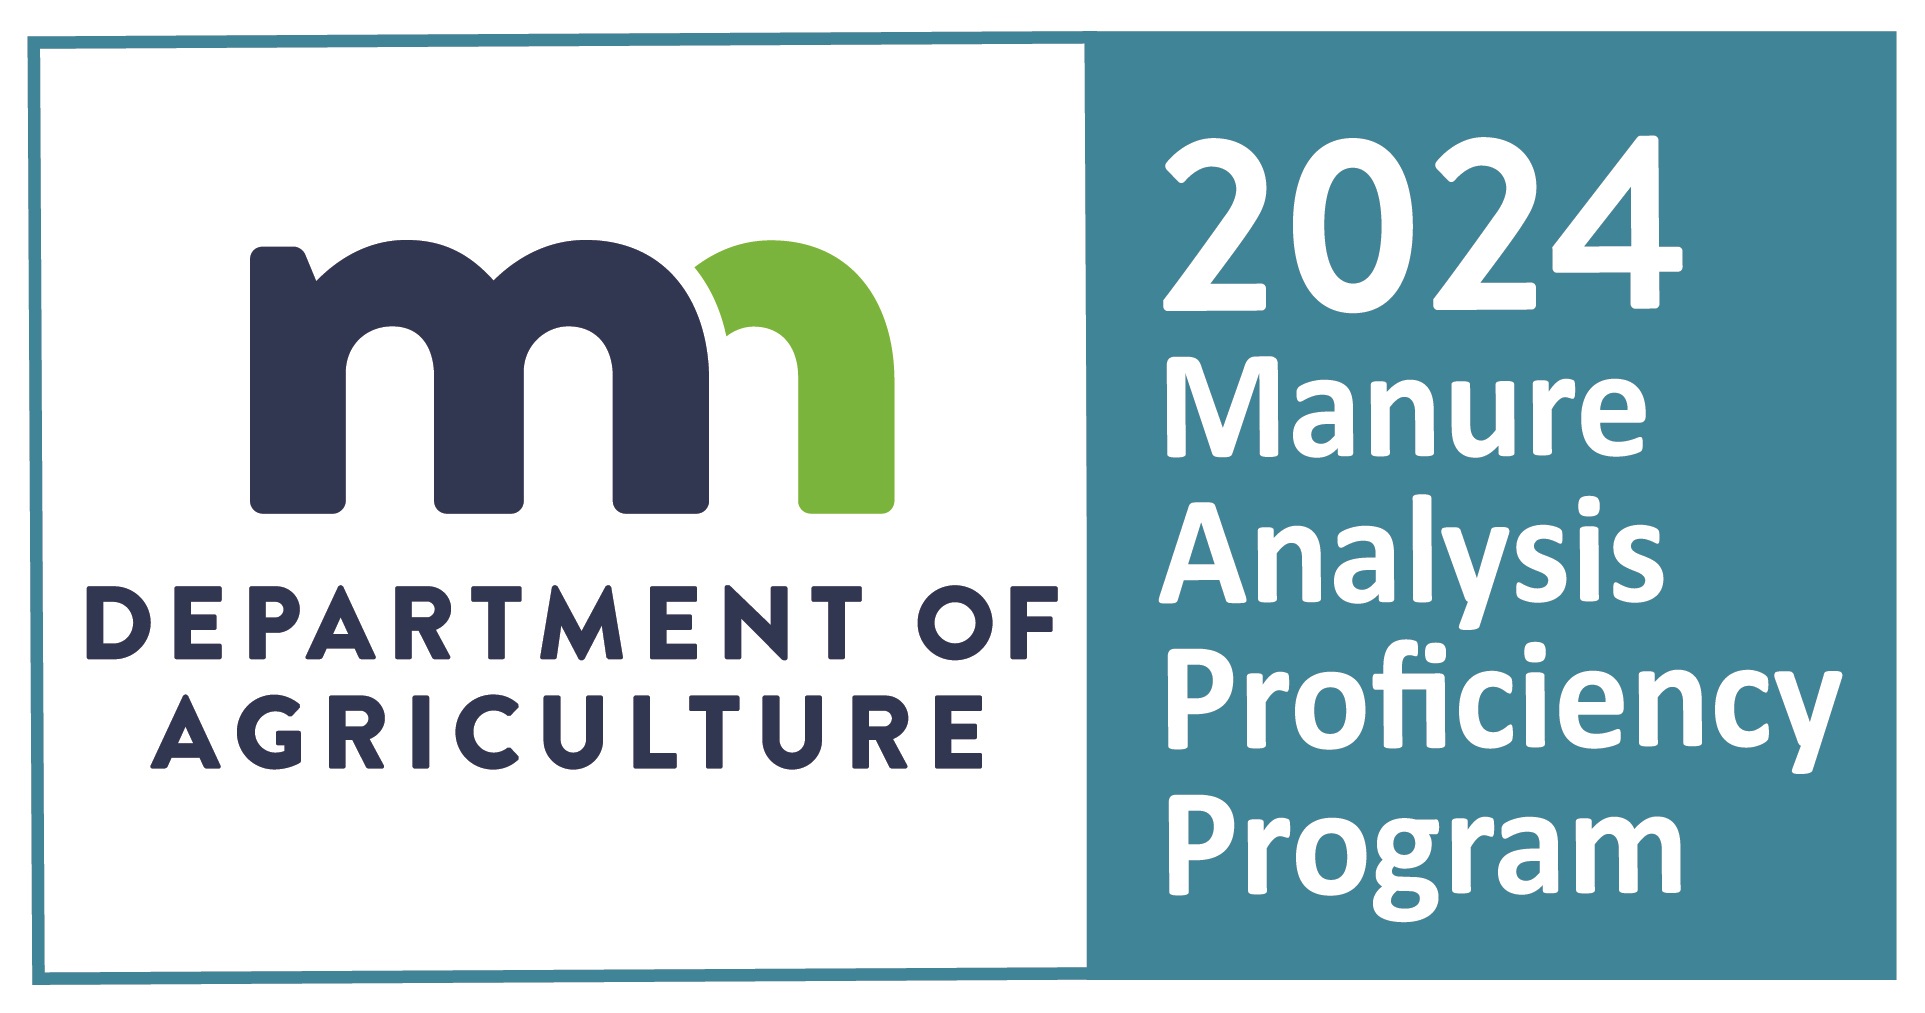 Minnesota Department of Agriculture 2024 Manure Analysis Proficiency Program logo